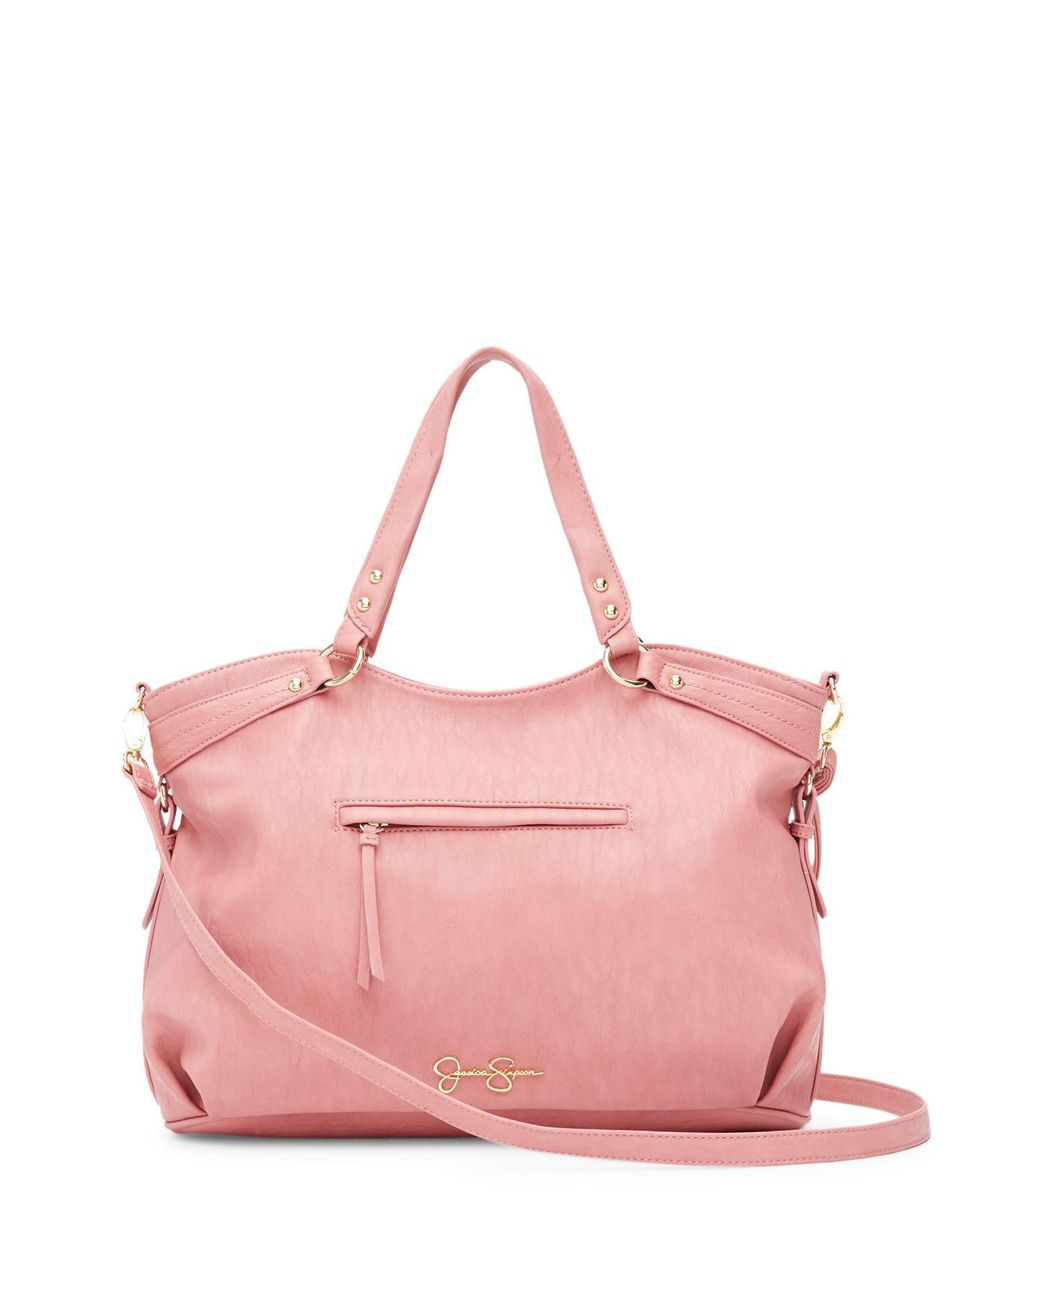 Jessica Simpson Doris Tote Bag in Pink | Lyst